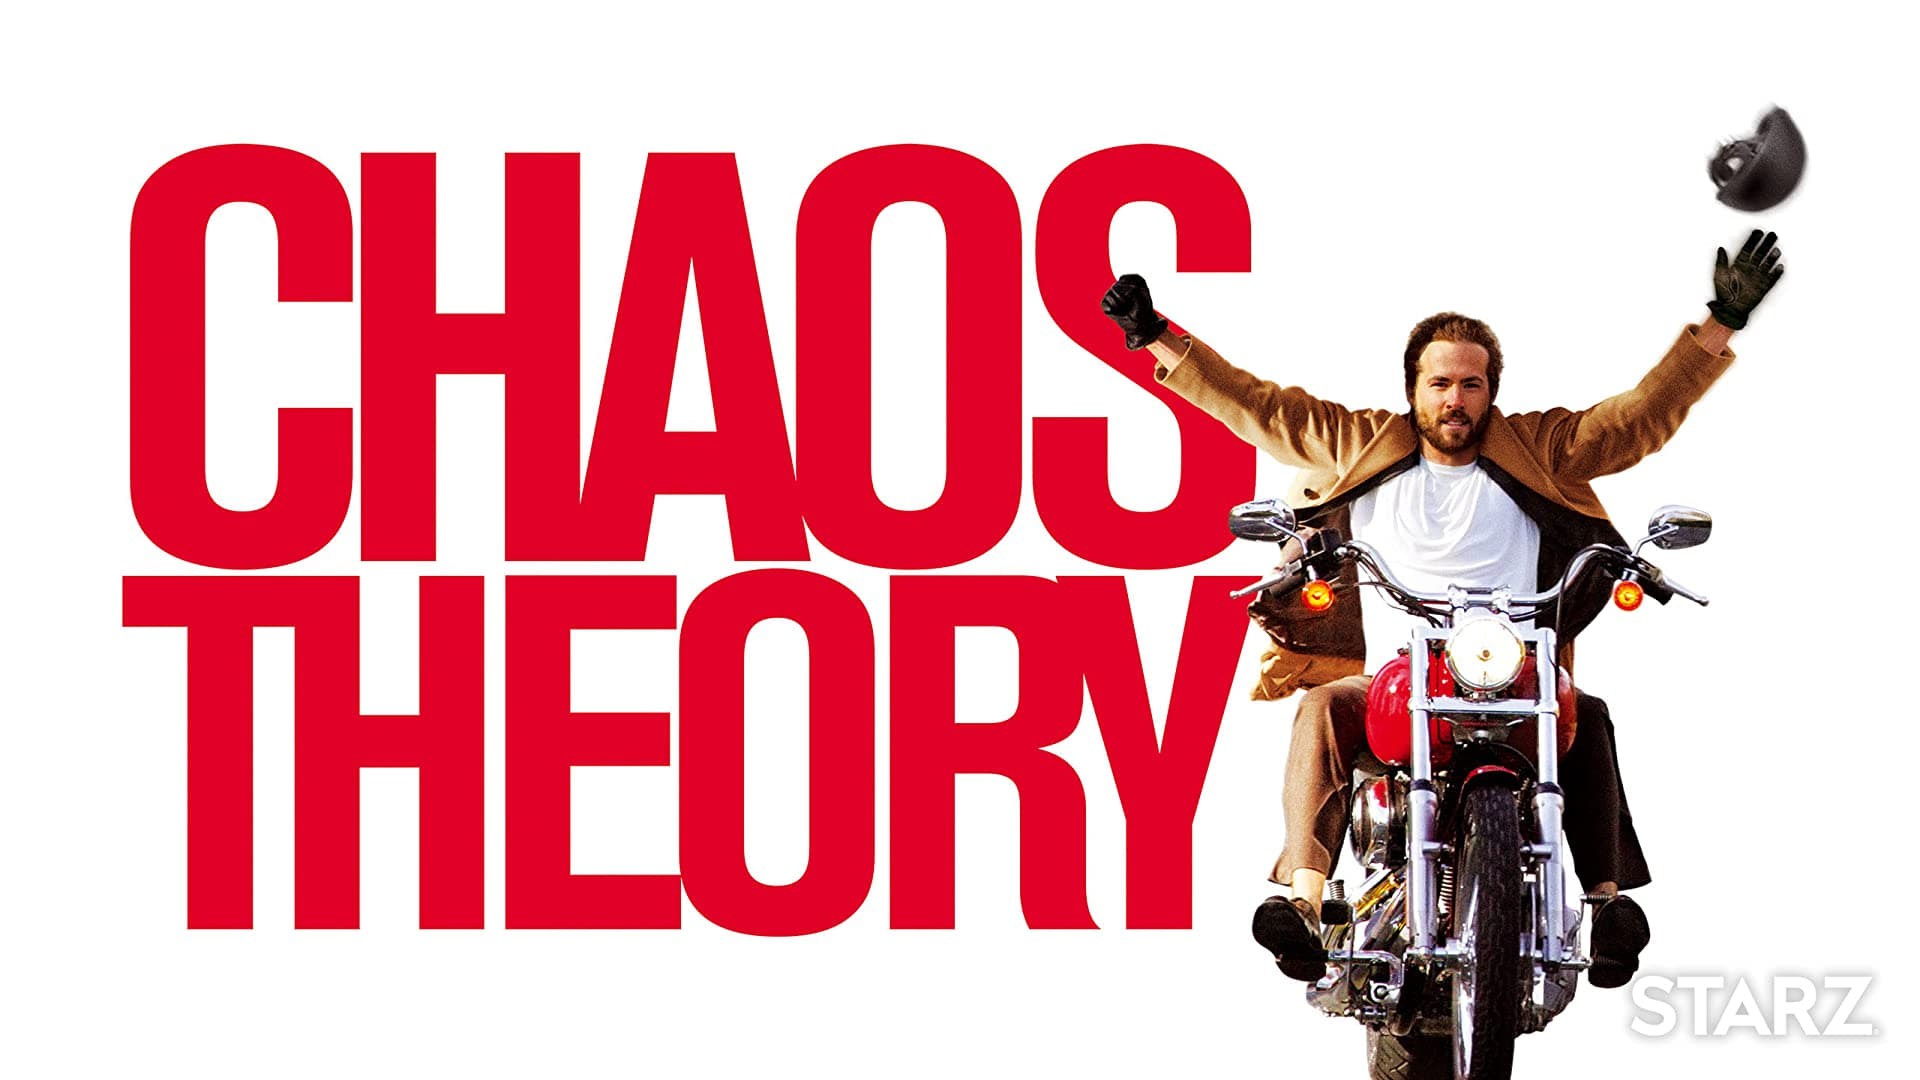 Teoria chaosu